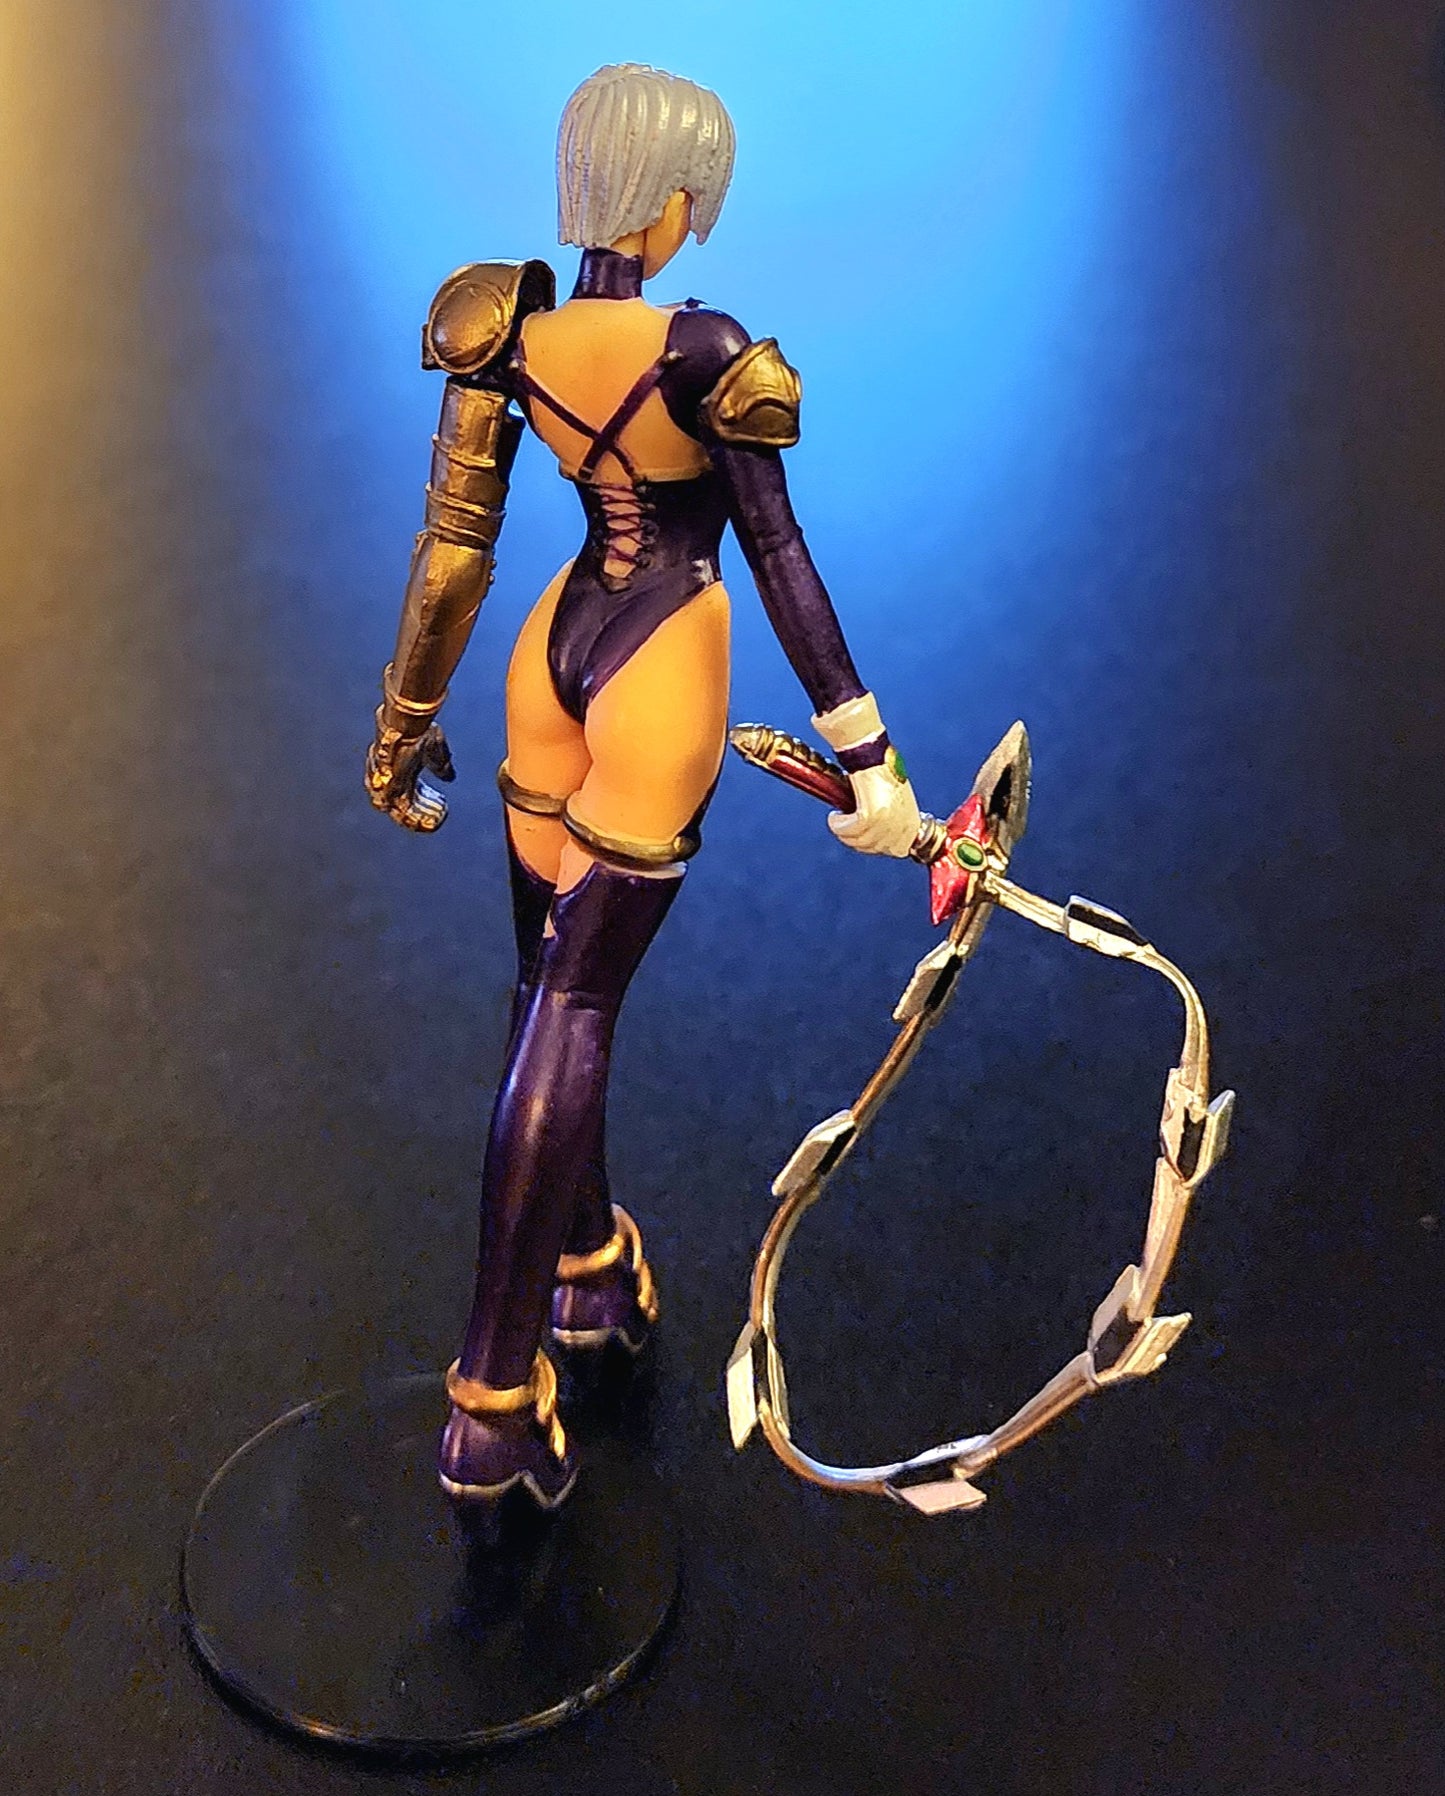 Ivy Valentine Soul Calibur II Gashapon Figure (Whip Sword Version)